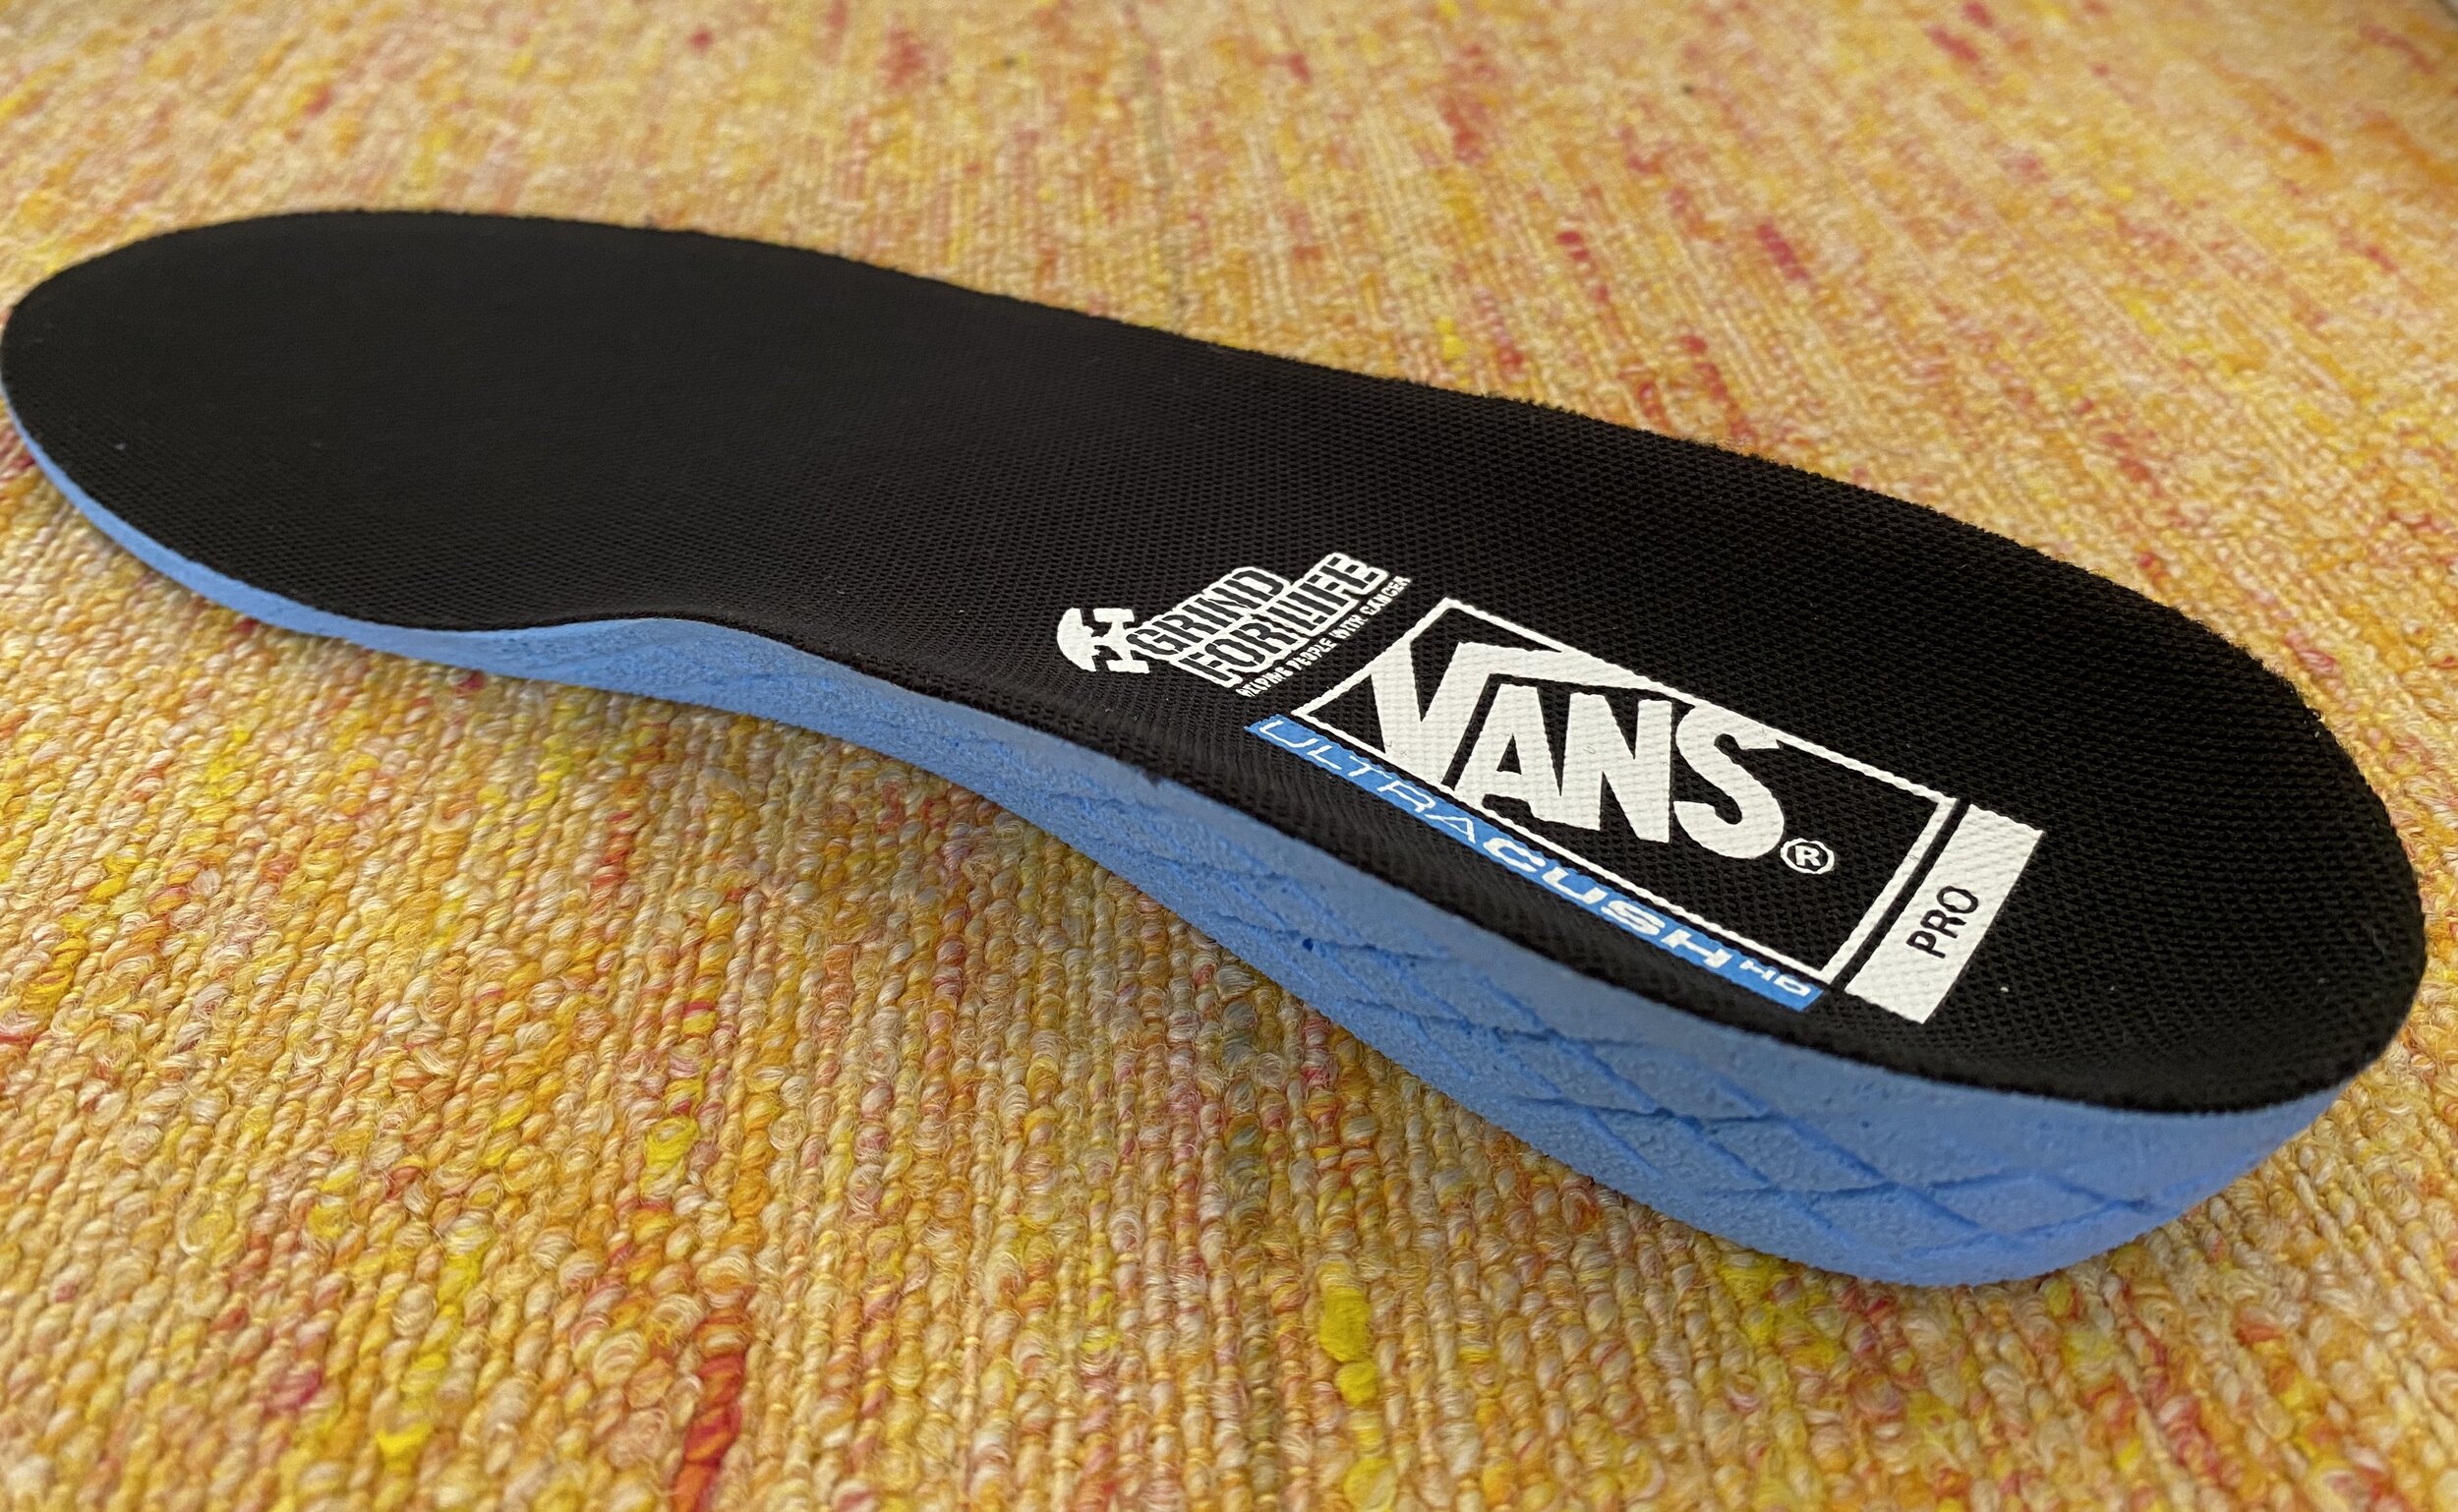 Vans Pro Skate Skate And Destroy Cancer Slip On Shoes With Ultracush Insole Duracap Grindforlife Org